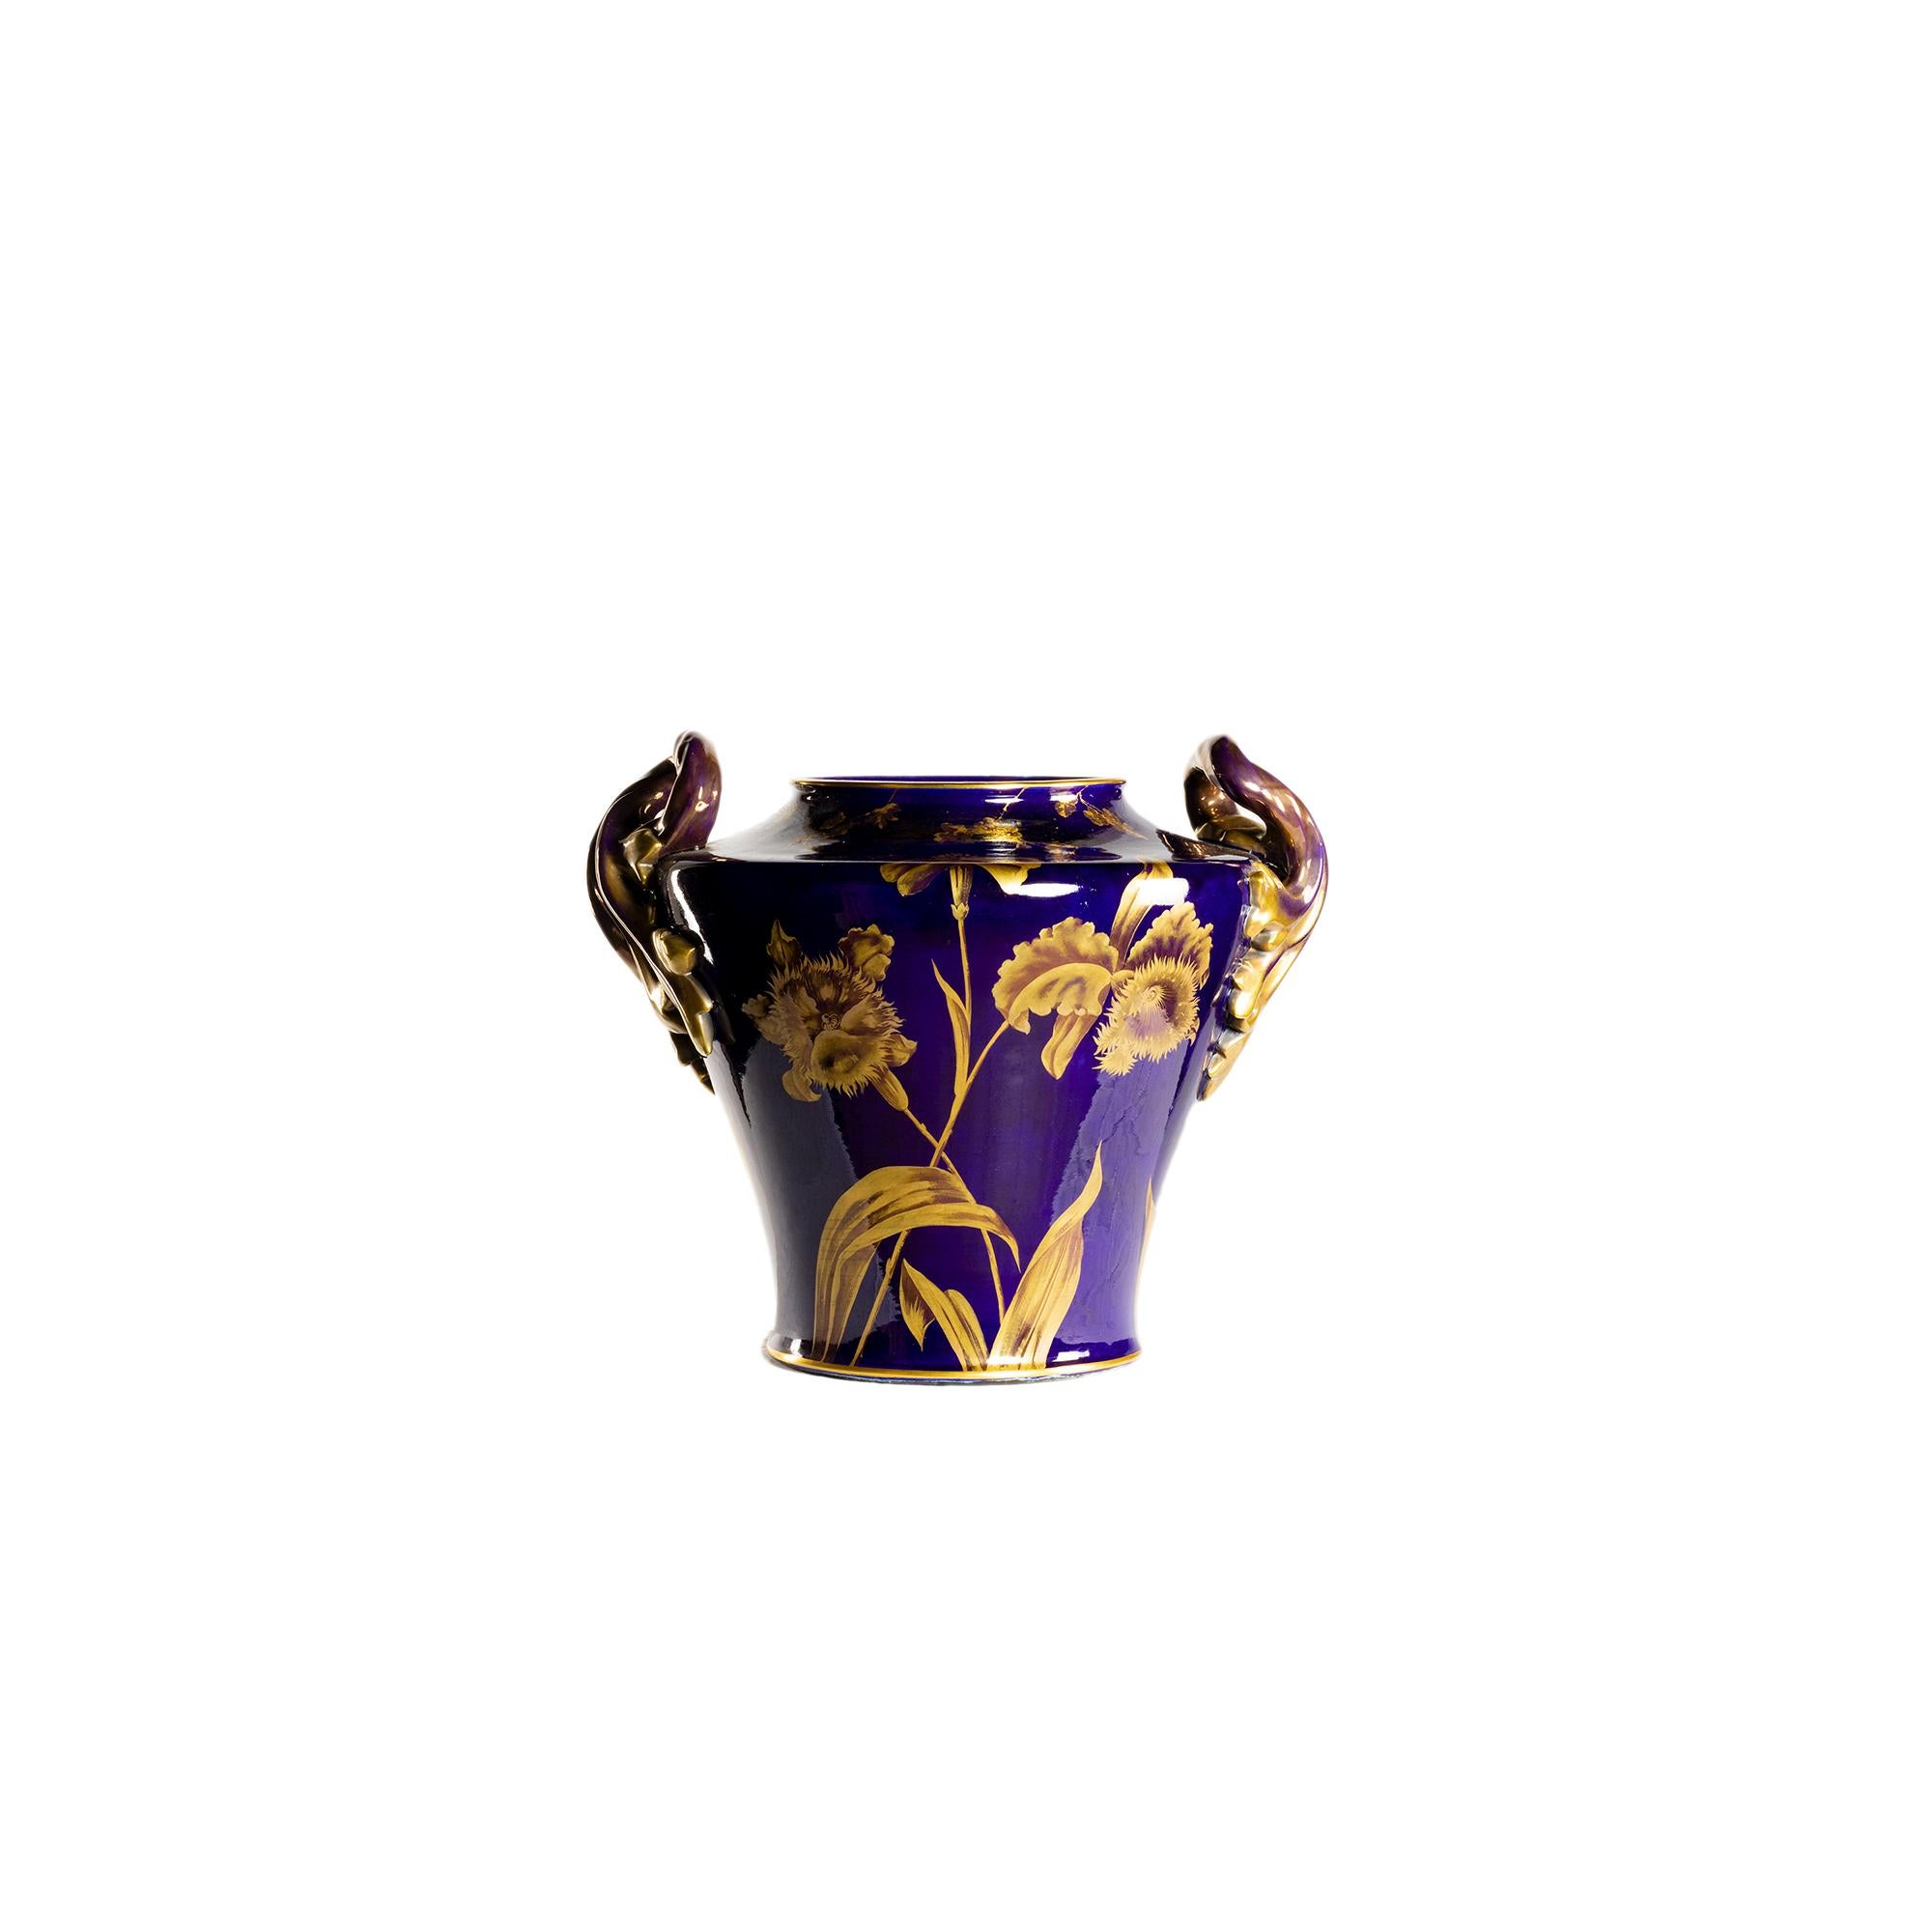 Precioso jarrón grande de cerámica con dos asas que representa una enredadera de Virginia en flor, realizada en dorado sobre un fondo azul de Tours.
Modelo de Gustave Asch, célebre escultor ceramista que trabajó en Sainte Radegonde (Rodez, Aveyron).